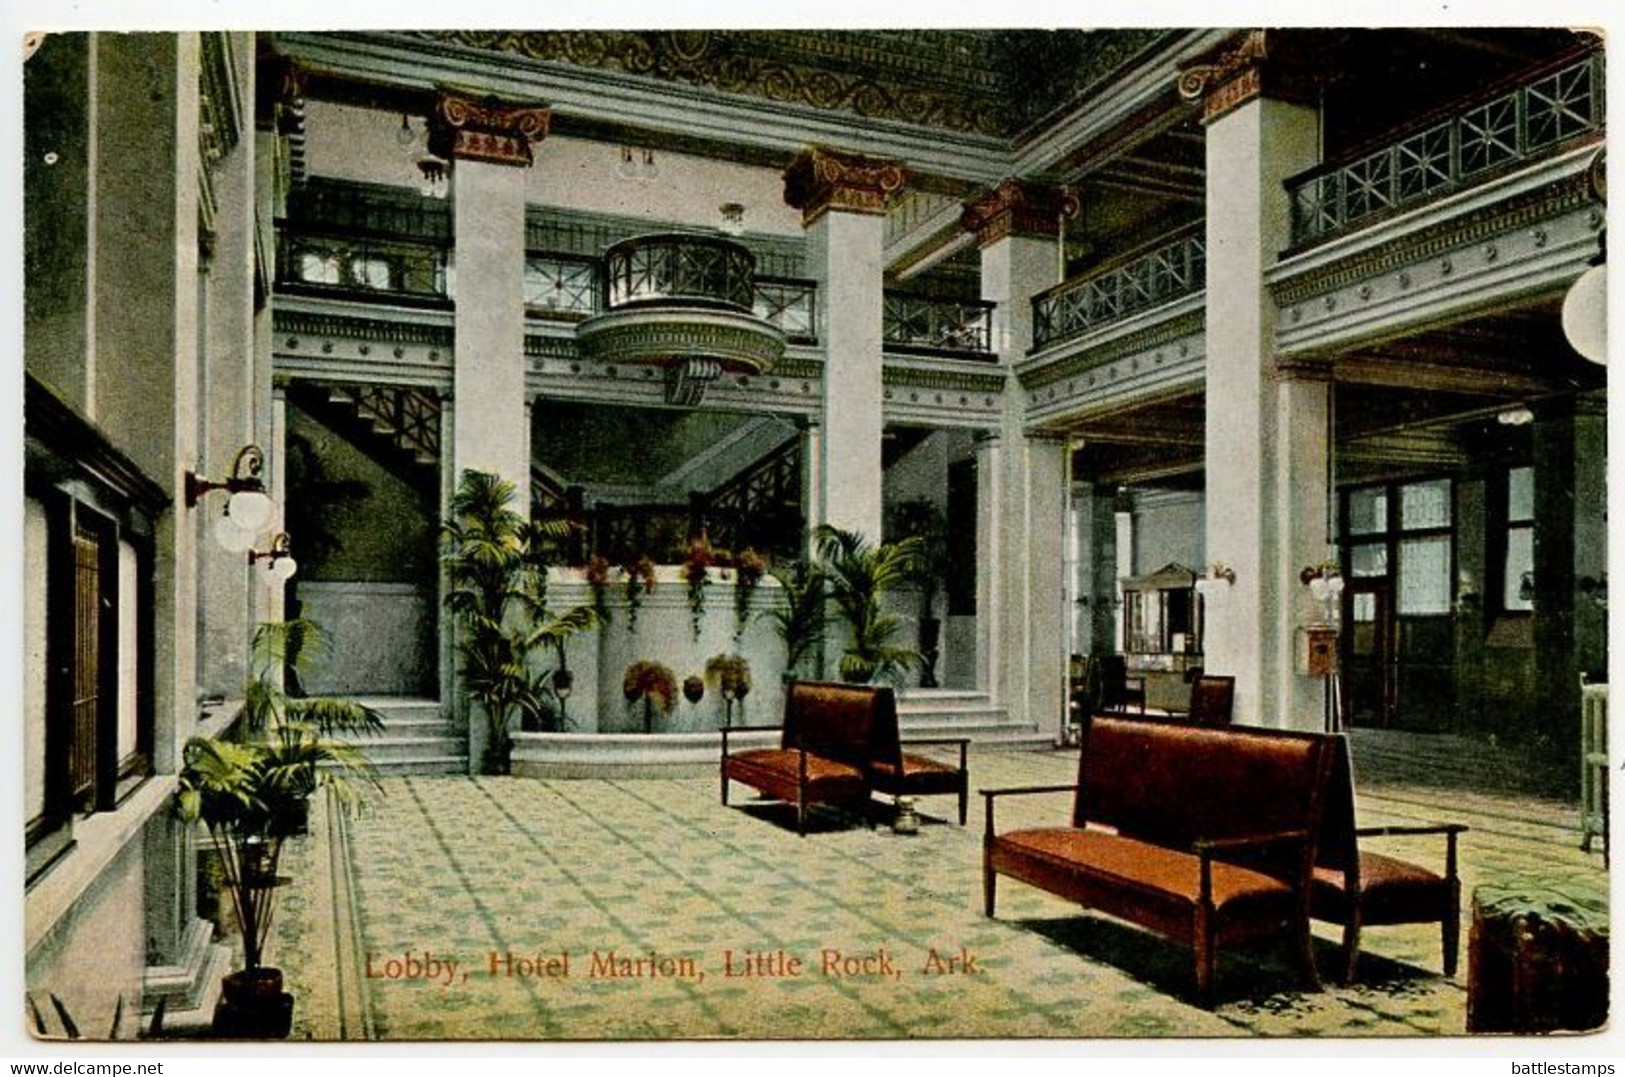 United States 1905 Postcard Little Rock, Arkansas - Hotel Marion Lobby; Little Rock & Fort Worth RPO Postmark - Little Rock